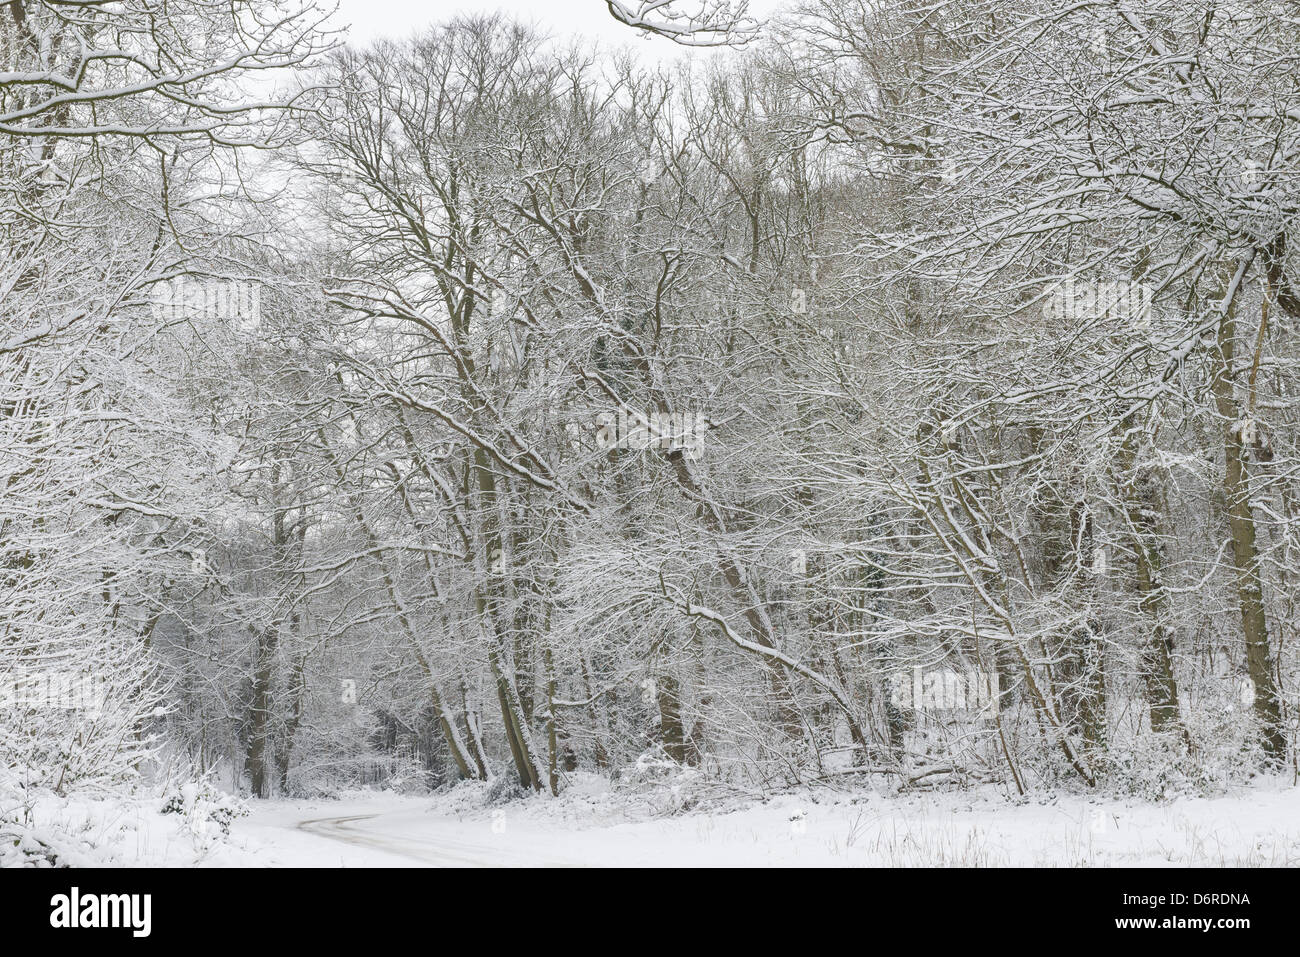 Decidious woodland in snow, Stock Photo